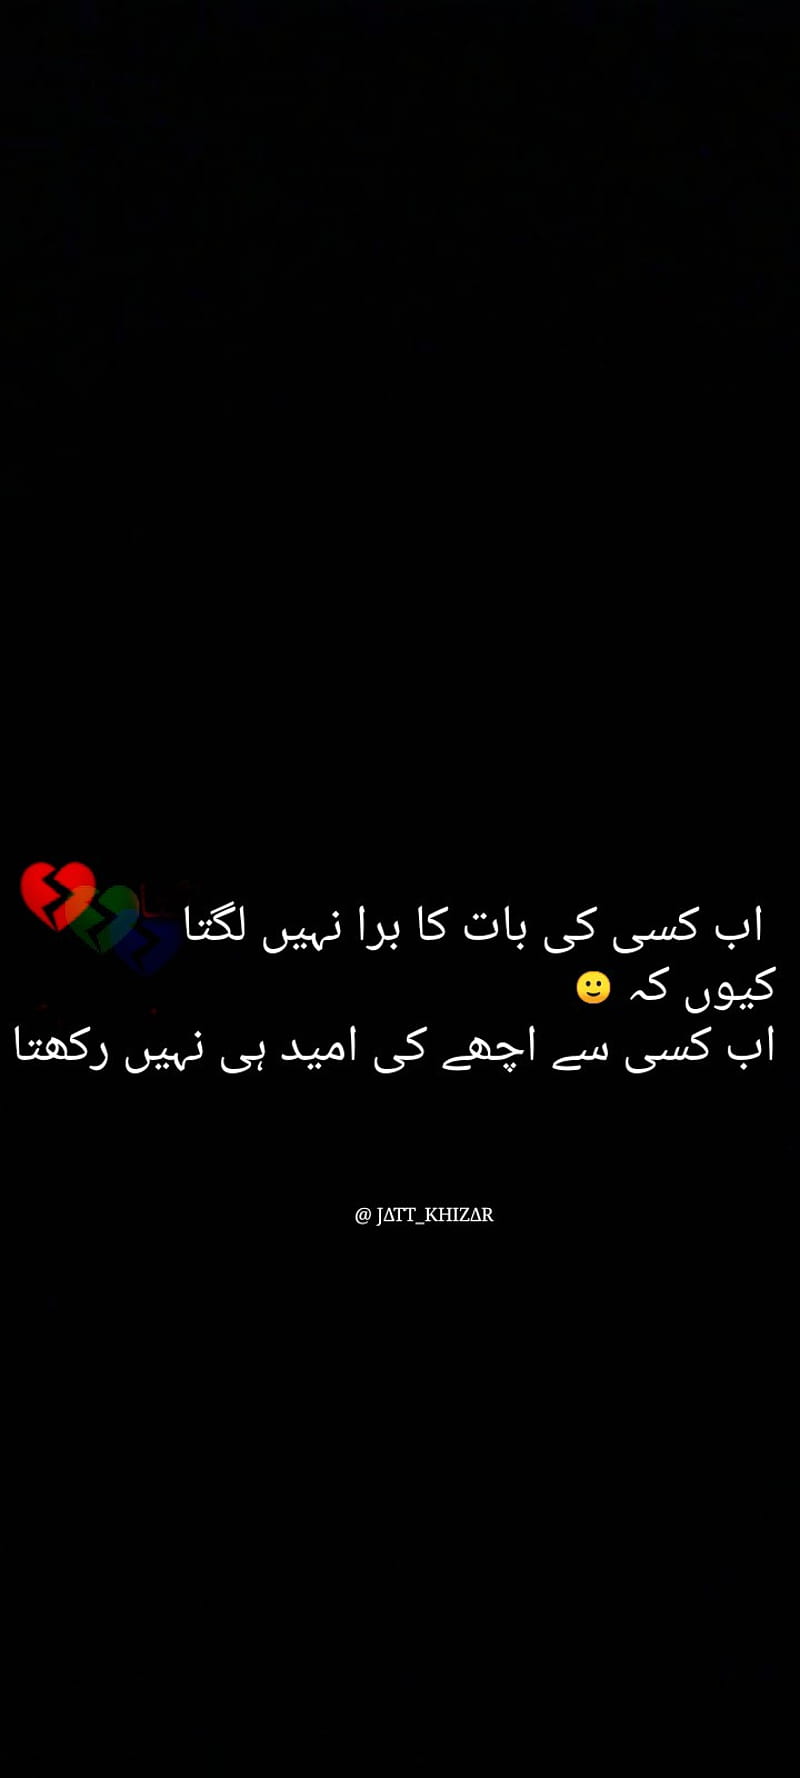 Urdu poetry, brokenheart, pain, quote, sayings, HD phone wallpaper